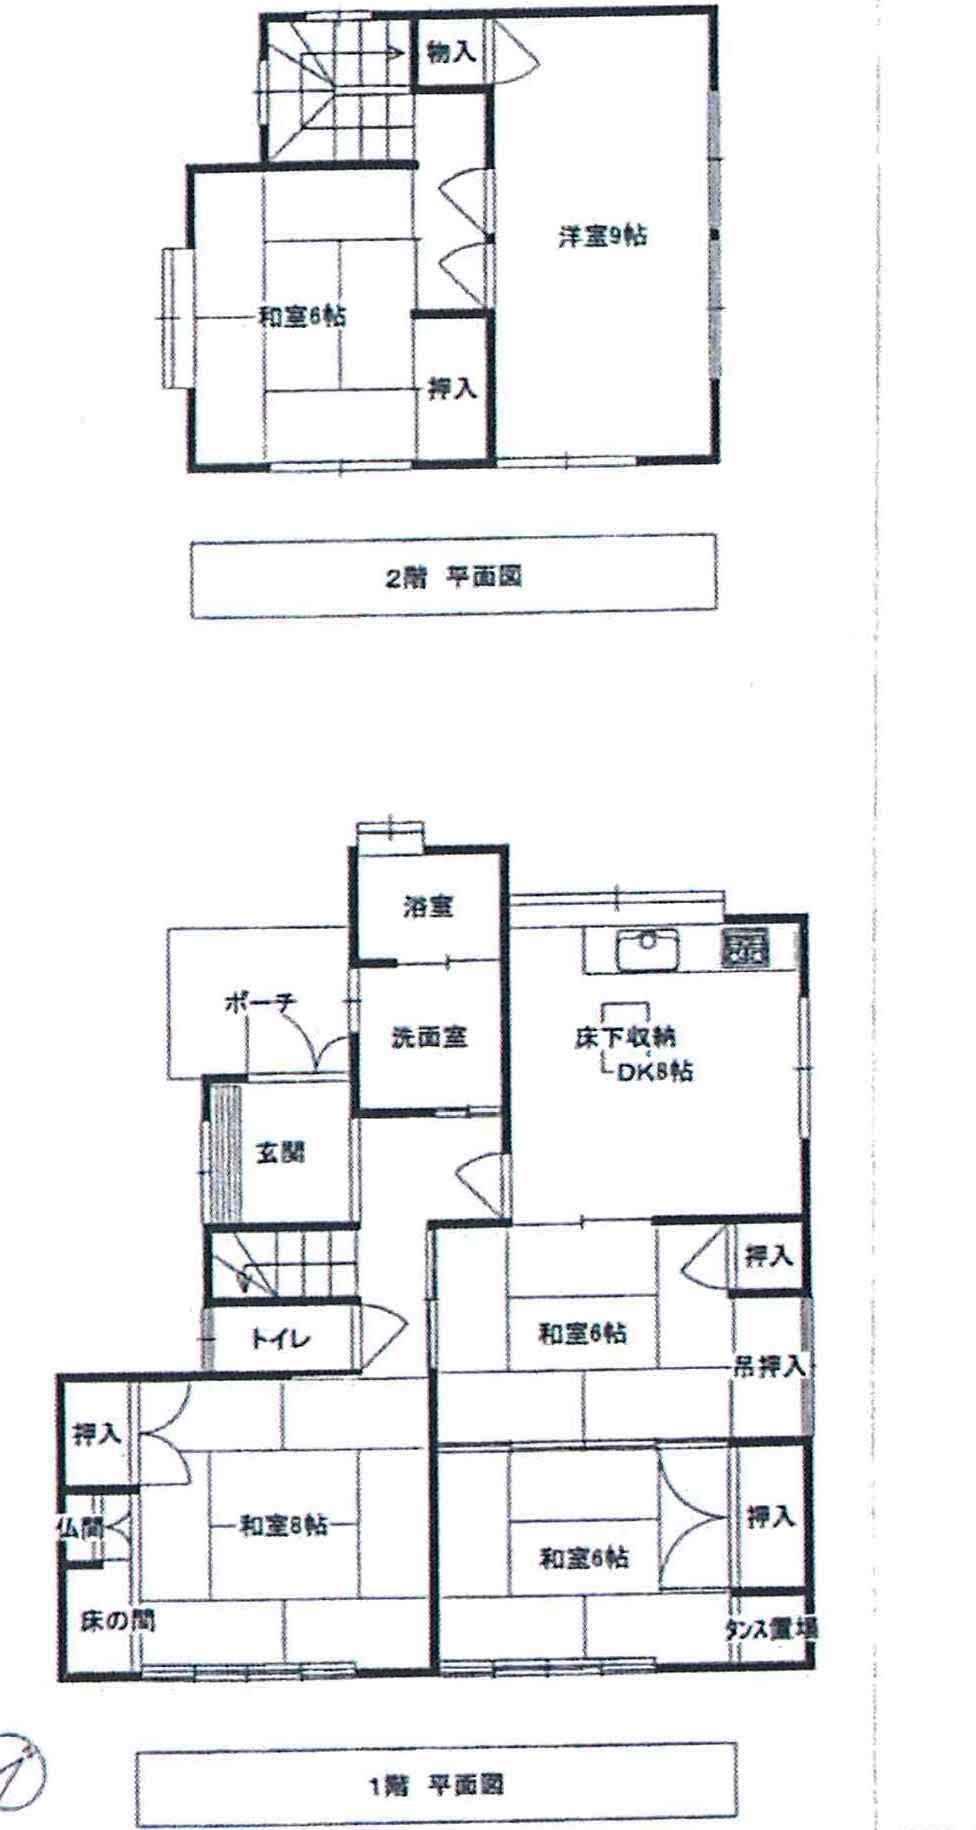 Floor plan. 4.9 million yen, 5DK, Land area 165.38 sq m , Building area 104.33 sq m site (September 2012) shooting